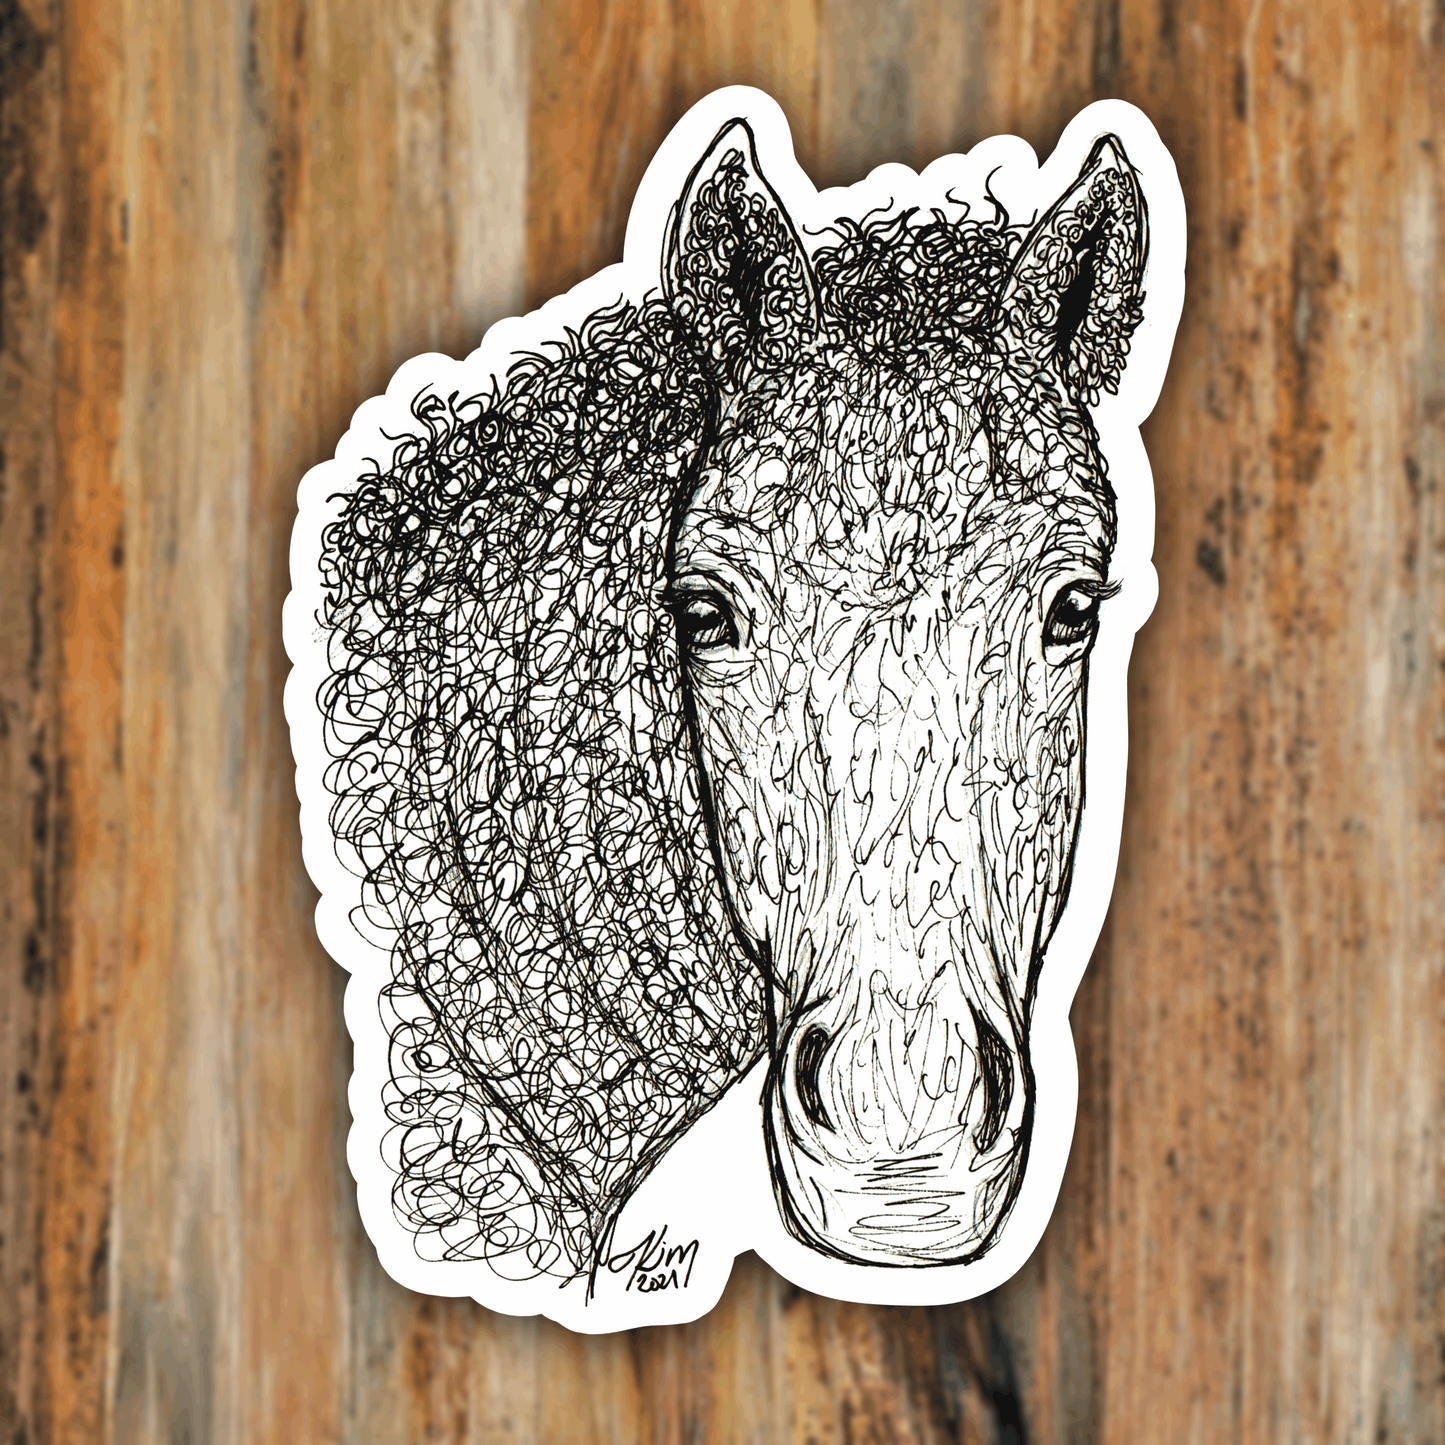 Bashkir Curly Horse Vinyl Sticker